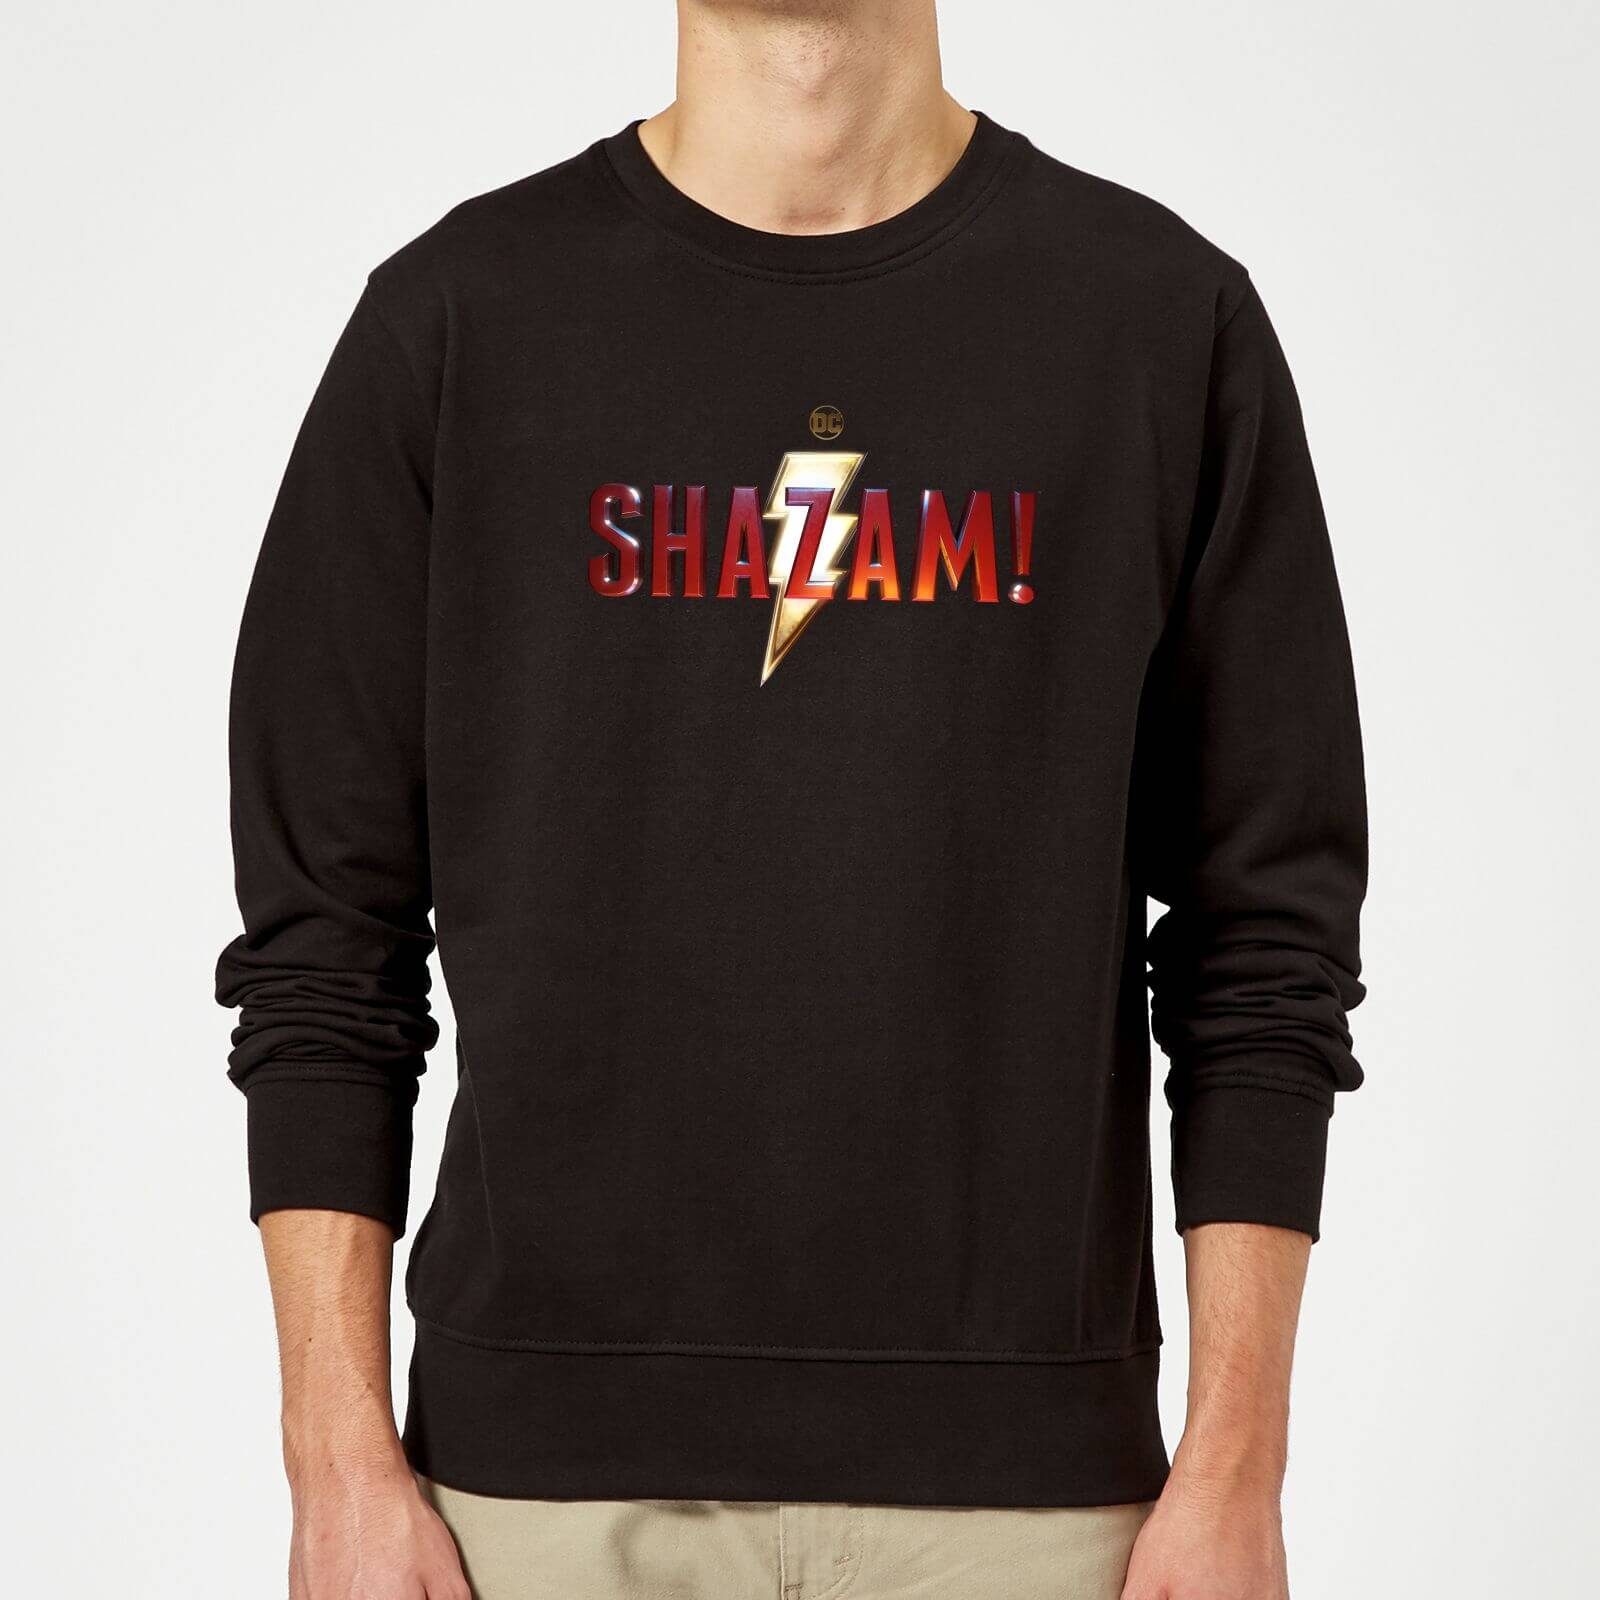 Dc Comics Shazam logo sweatshirt - black - m - black